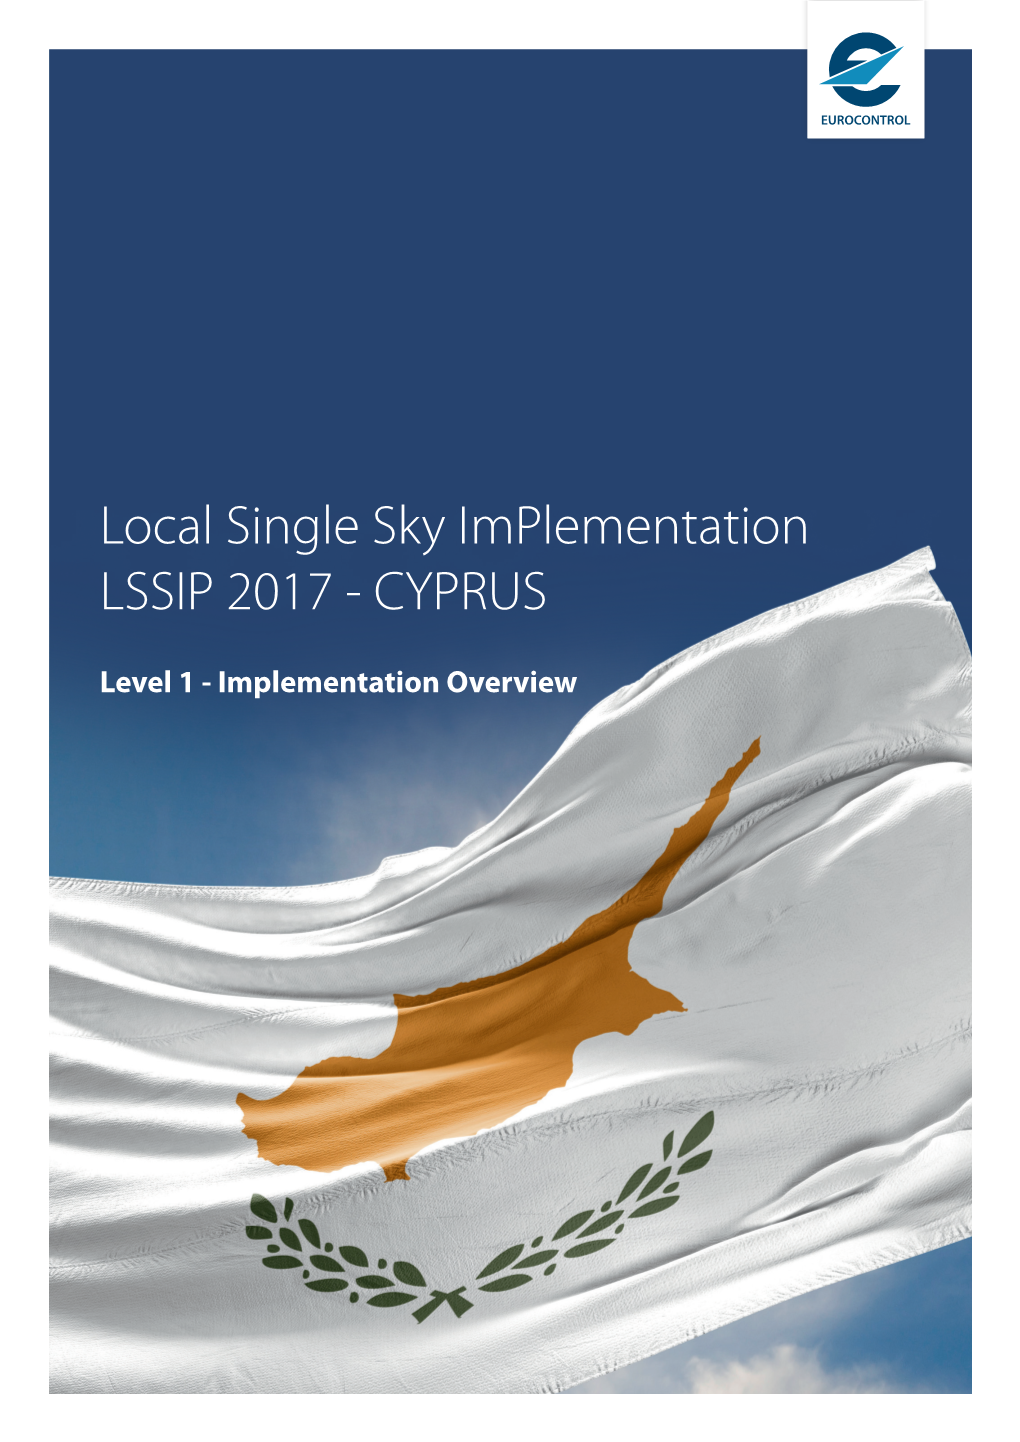 Local Single Sky Implementation LSSIP 2017 - CYPRUS